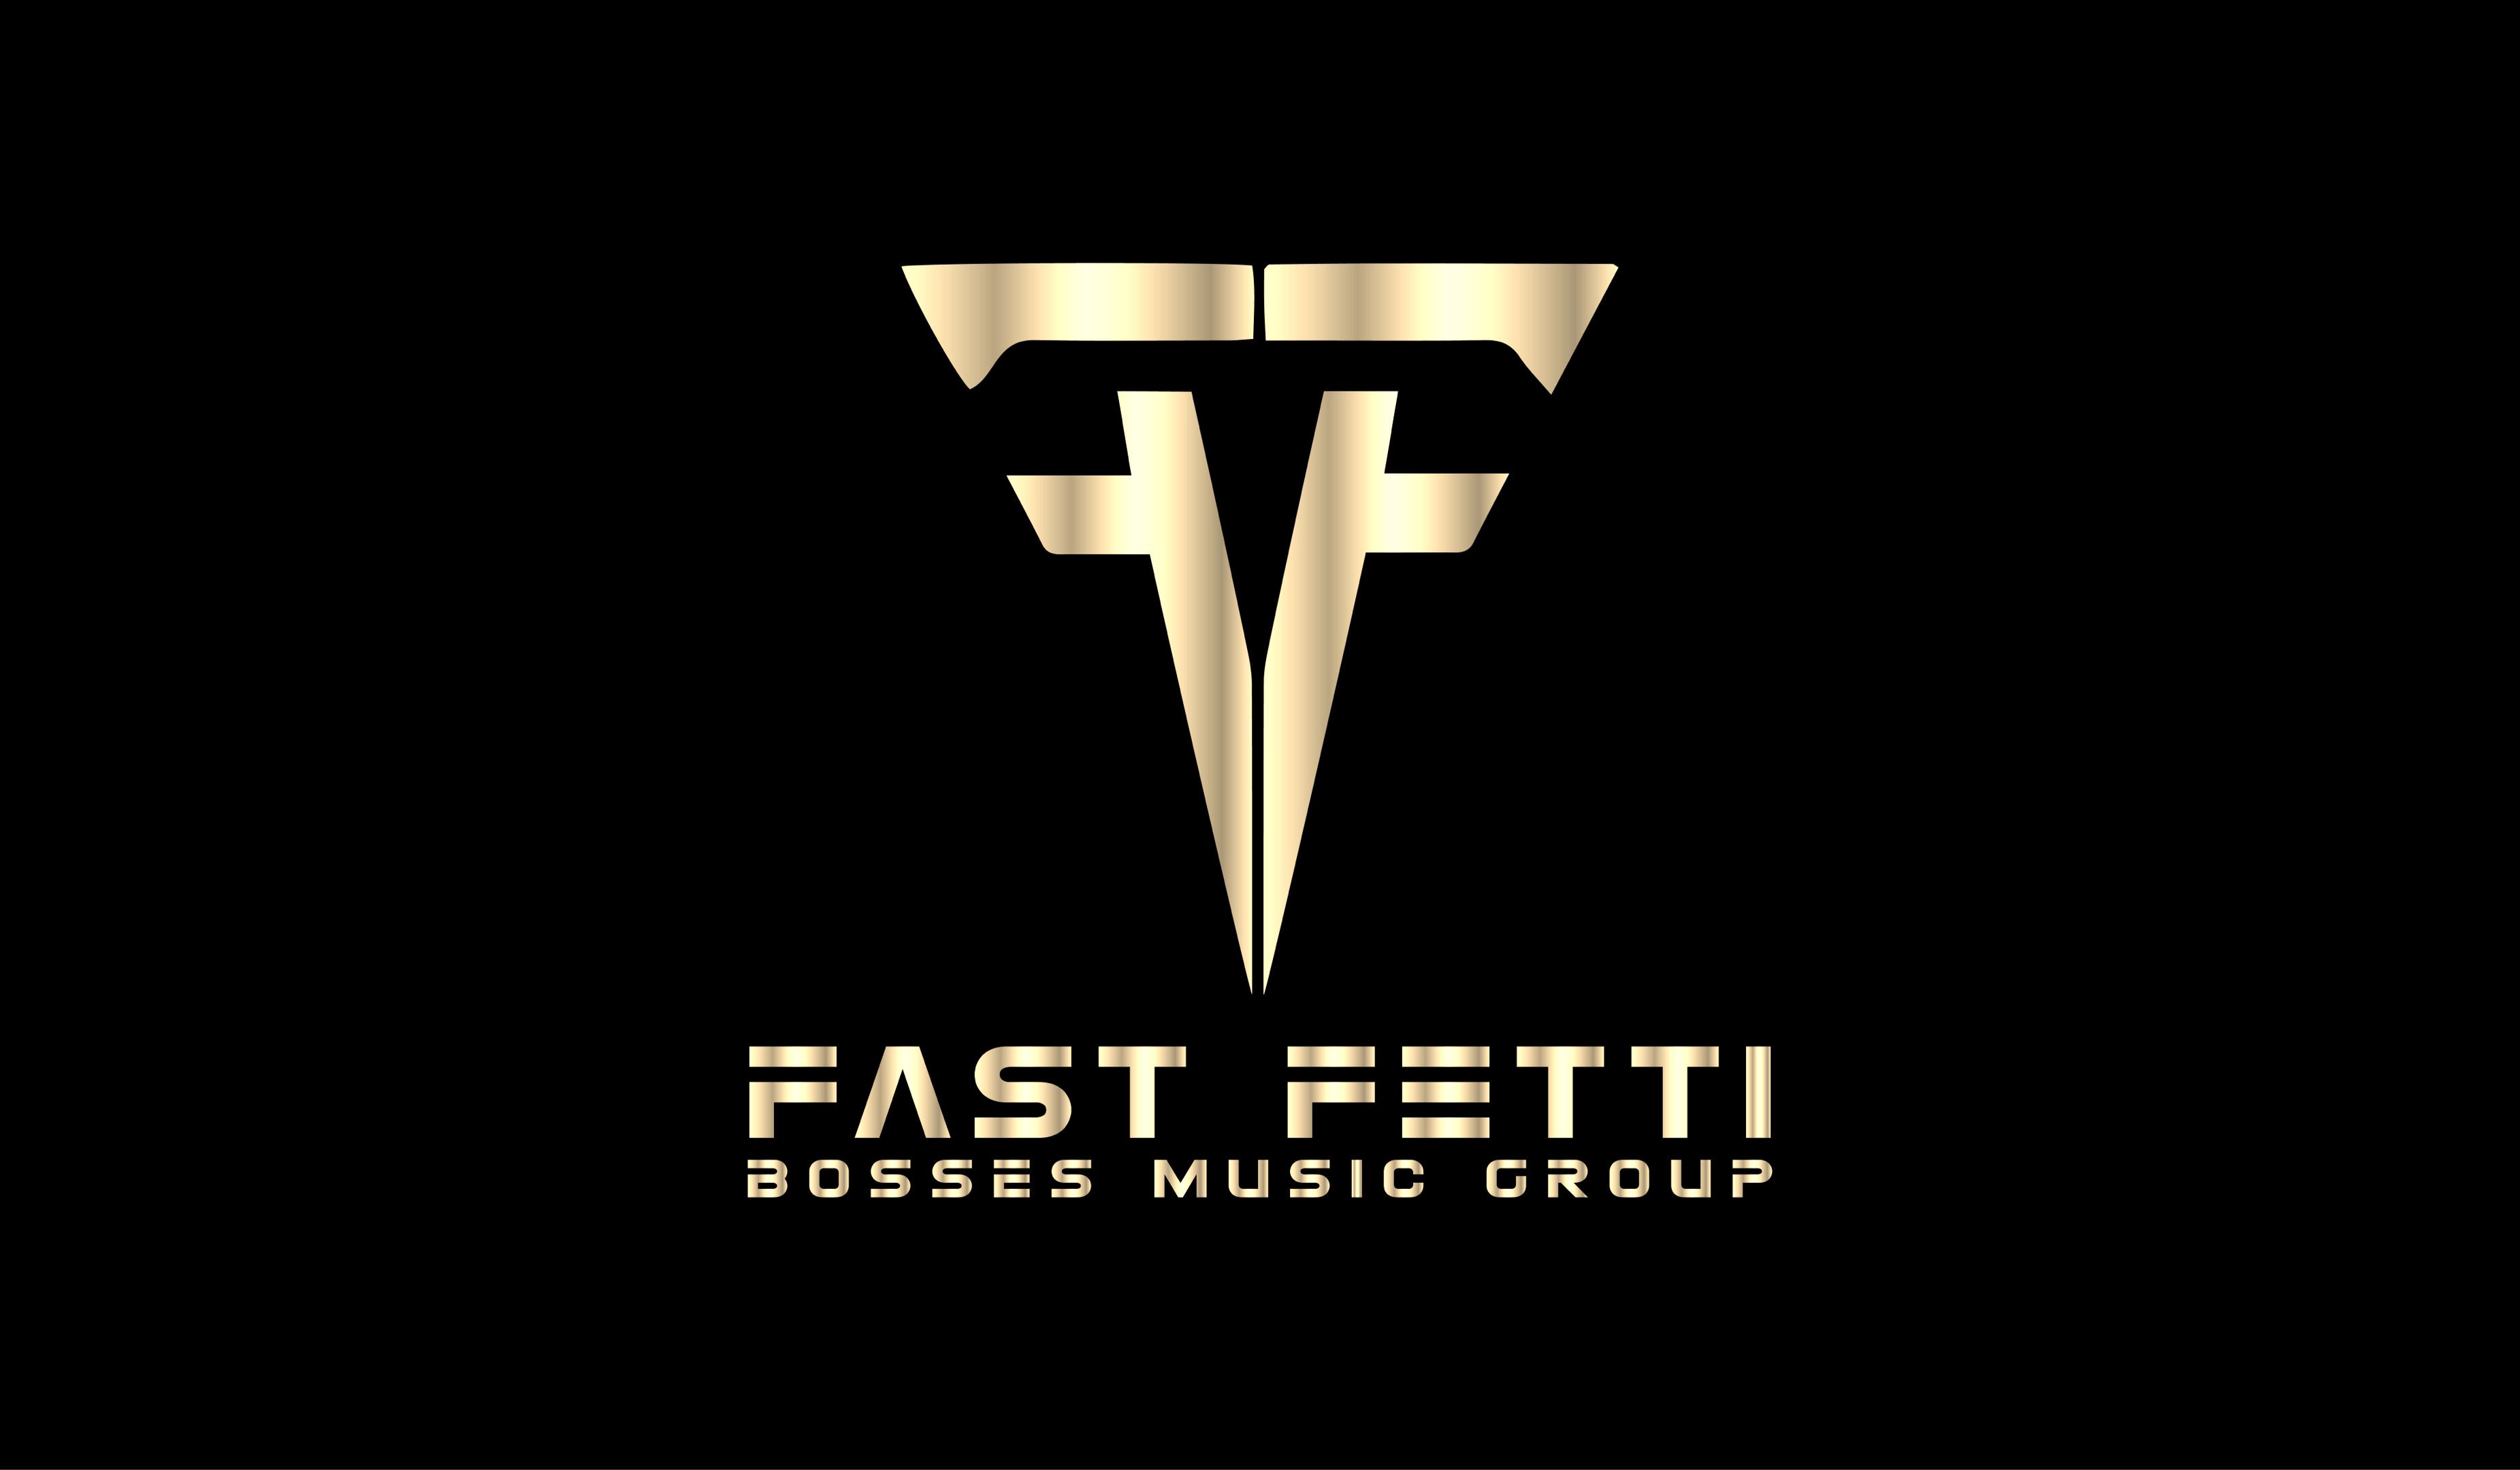 Fast Fetti Bosses Music Group